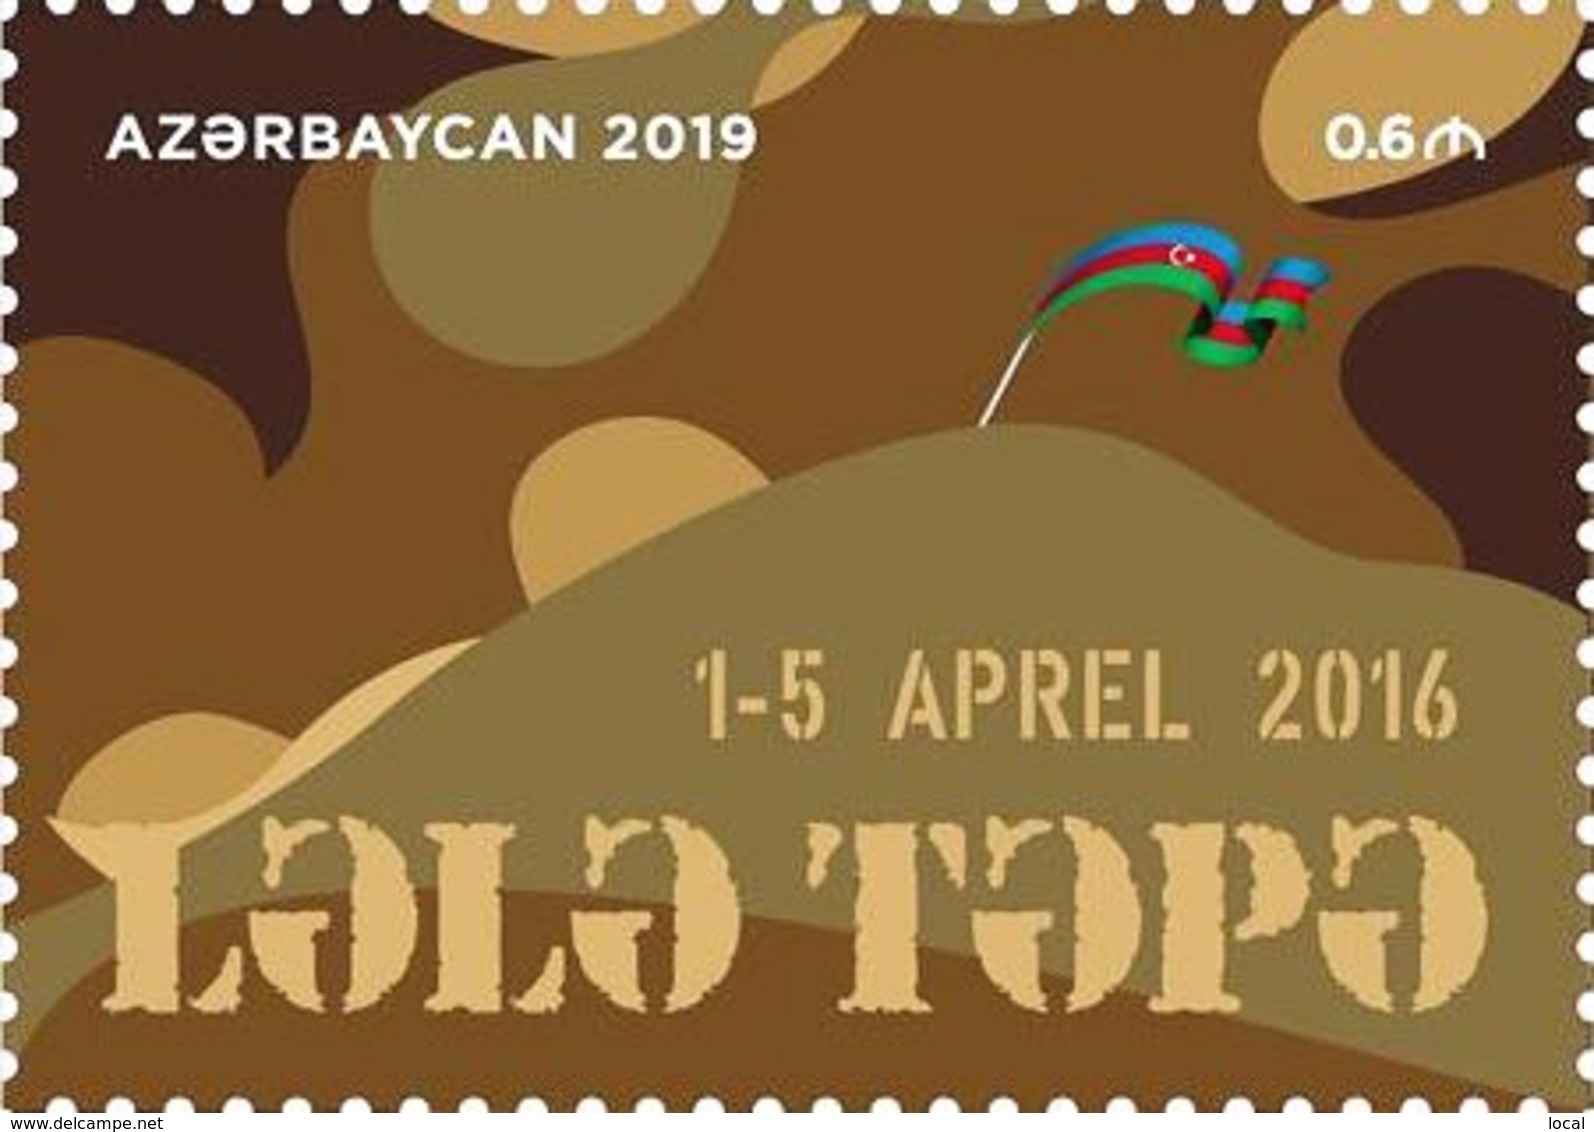 April, 2016 Fights. Lala Tapa. Azerbaijan Stamp 2019. Azermarka - Azerbaïjan